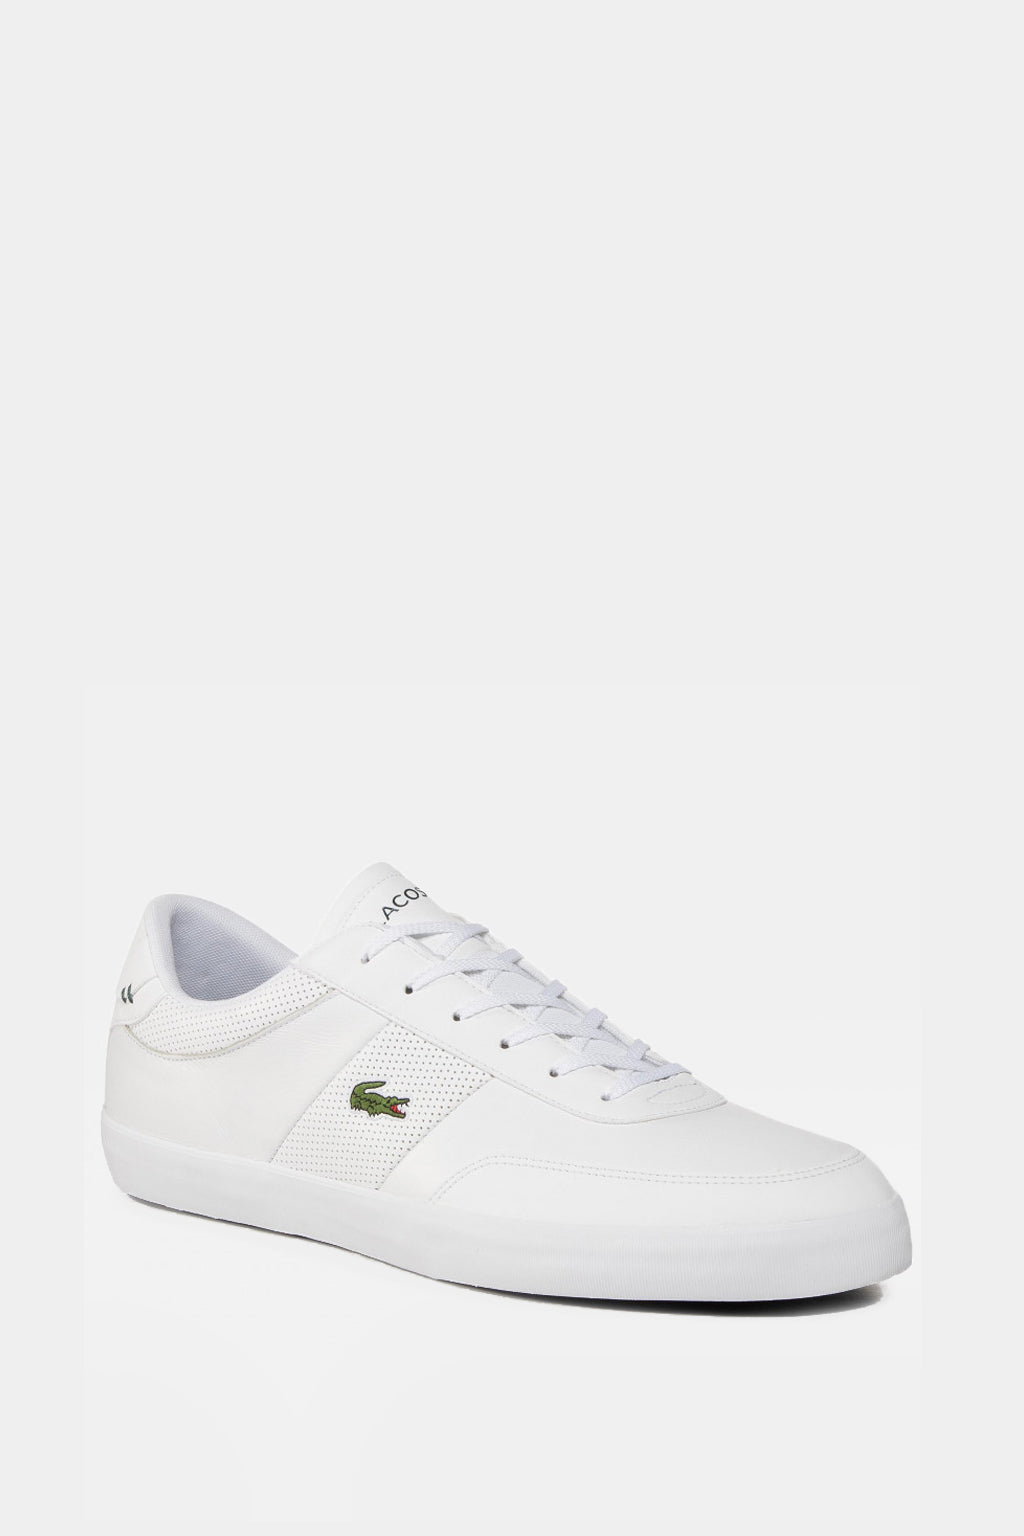 Lacoste - Sneaker Court - Master White